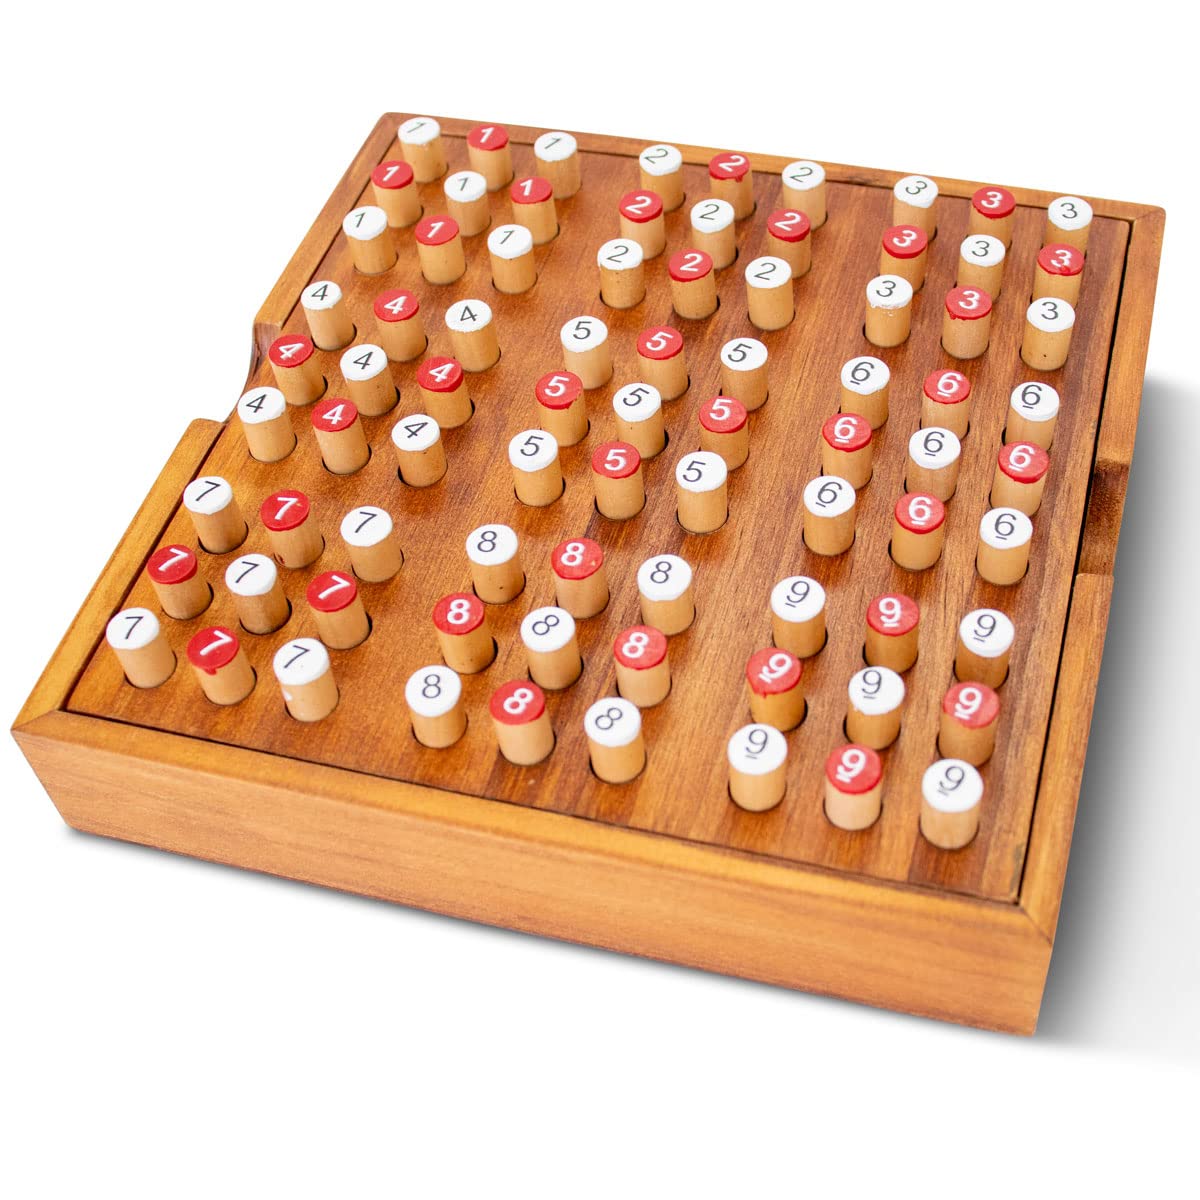 Wooden Sudoku Challenge by BrainCandy.